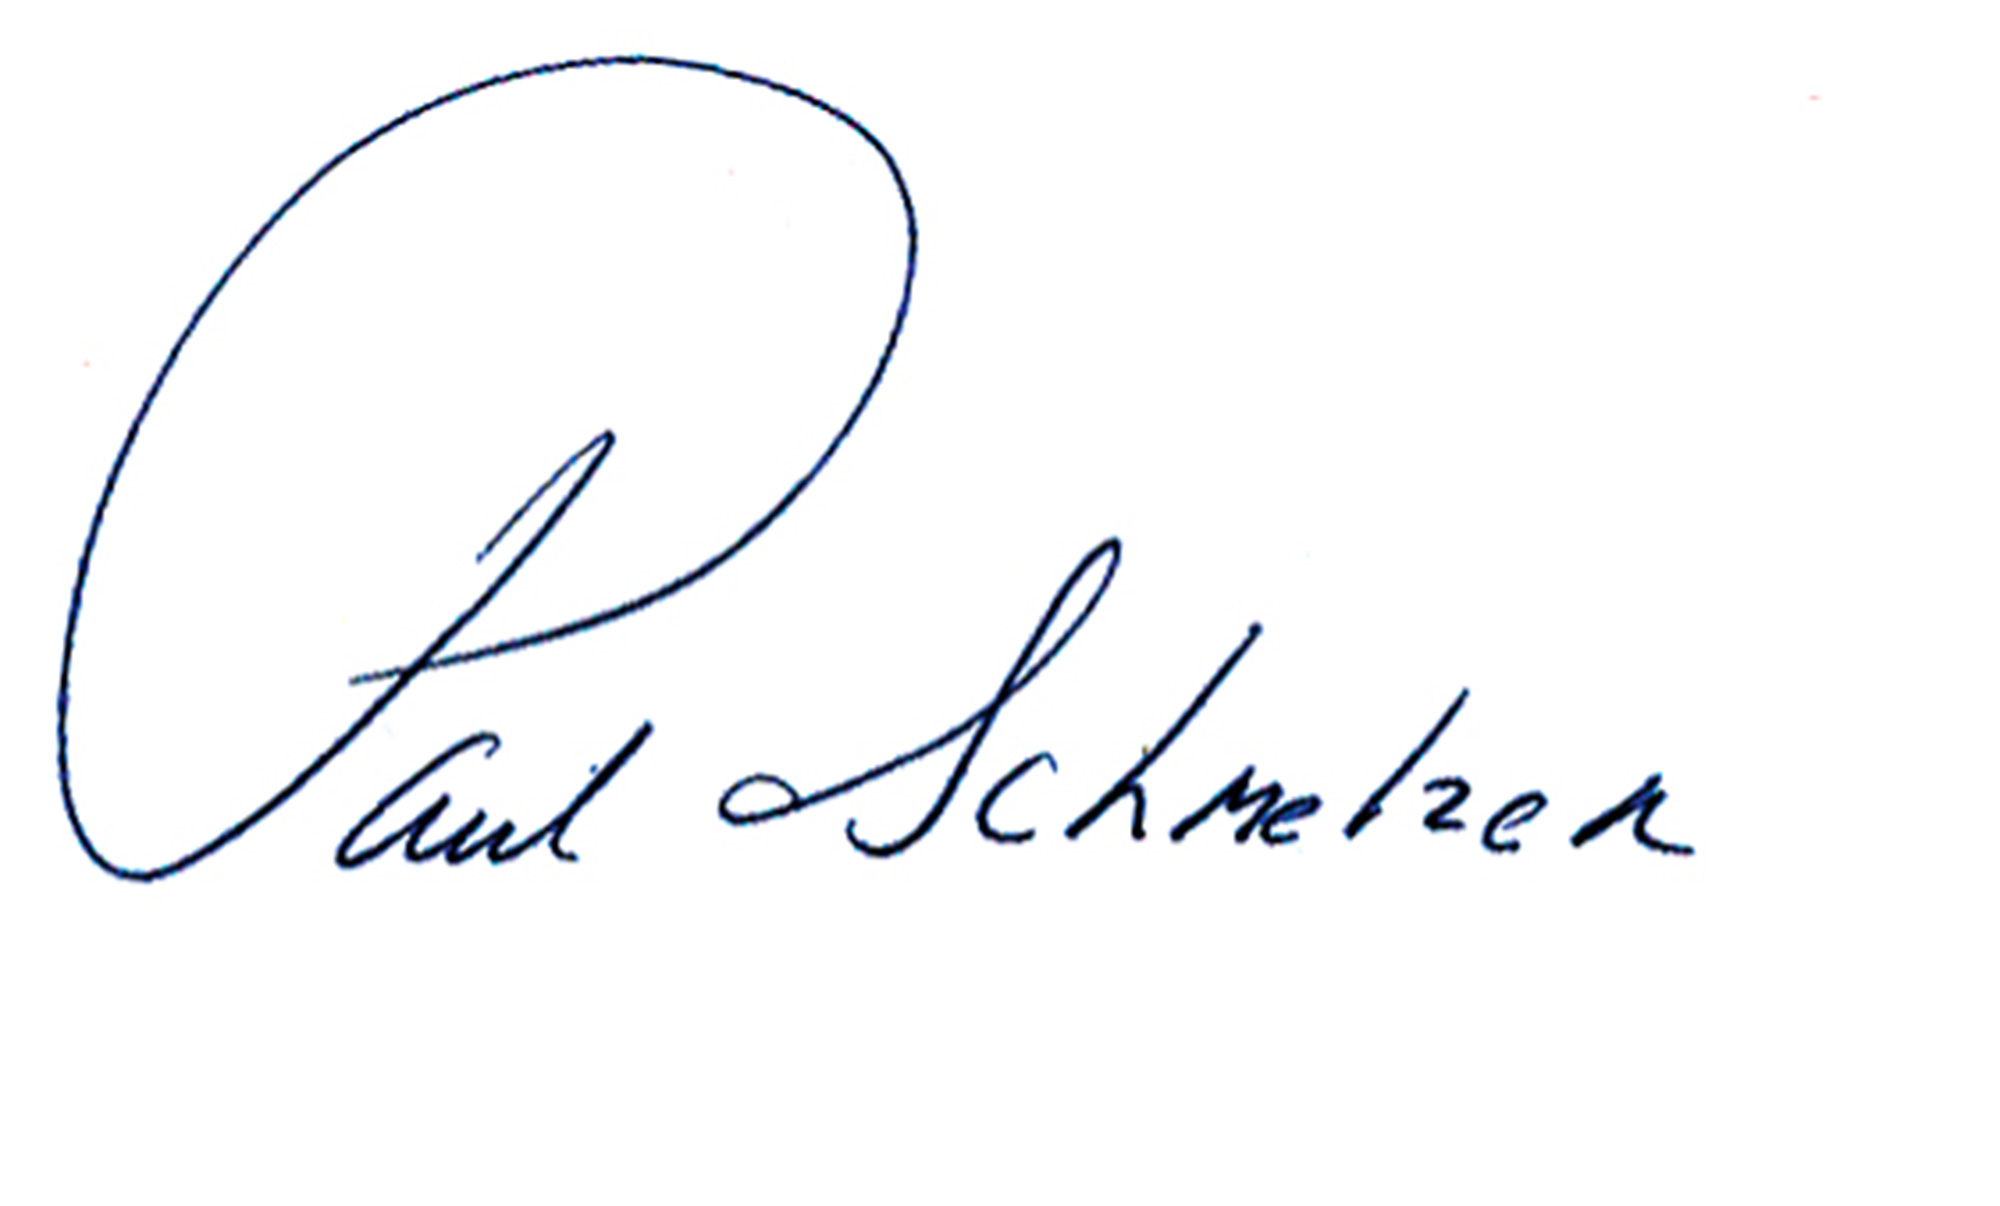 A photograph of Pat Buchanan's written version of the name Paul Schmelzer.